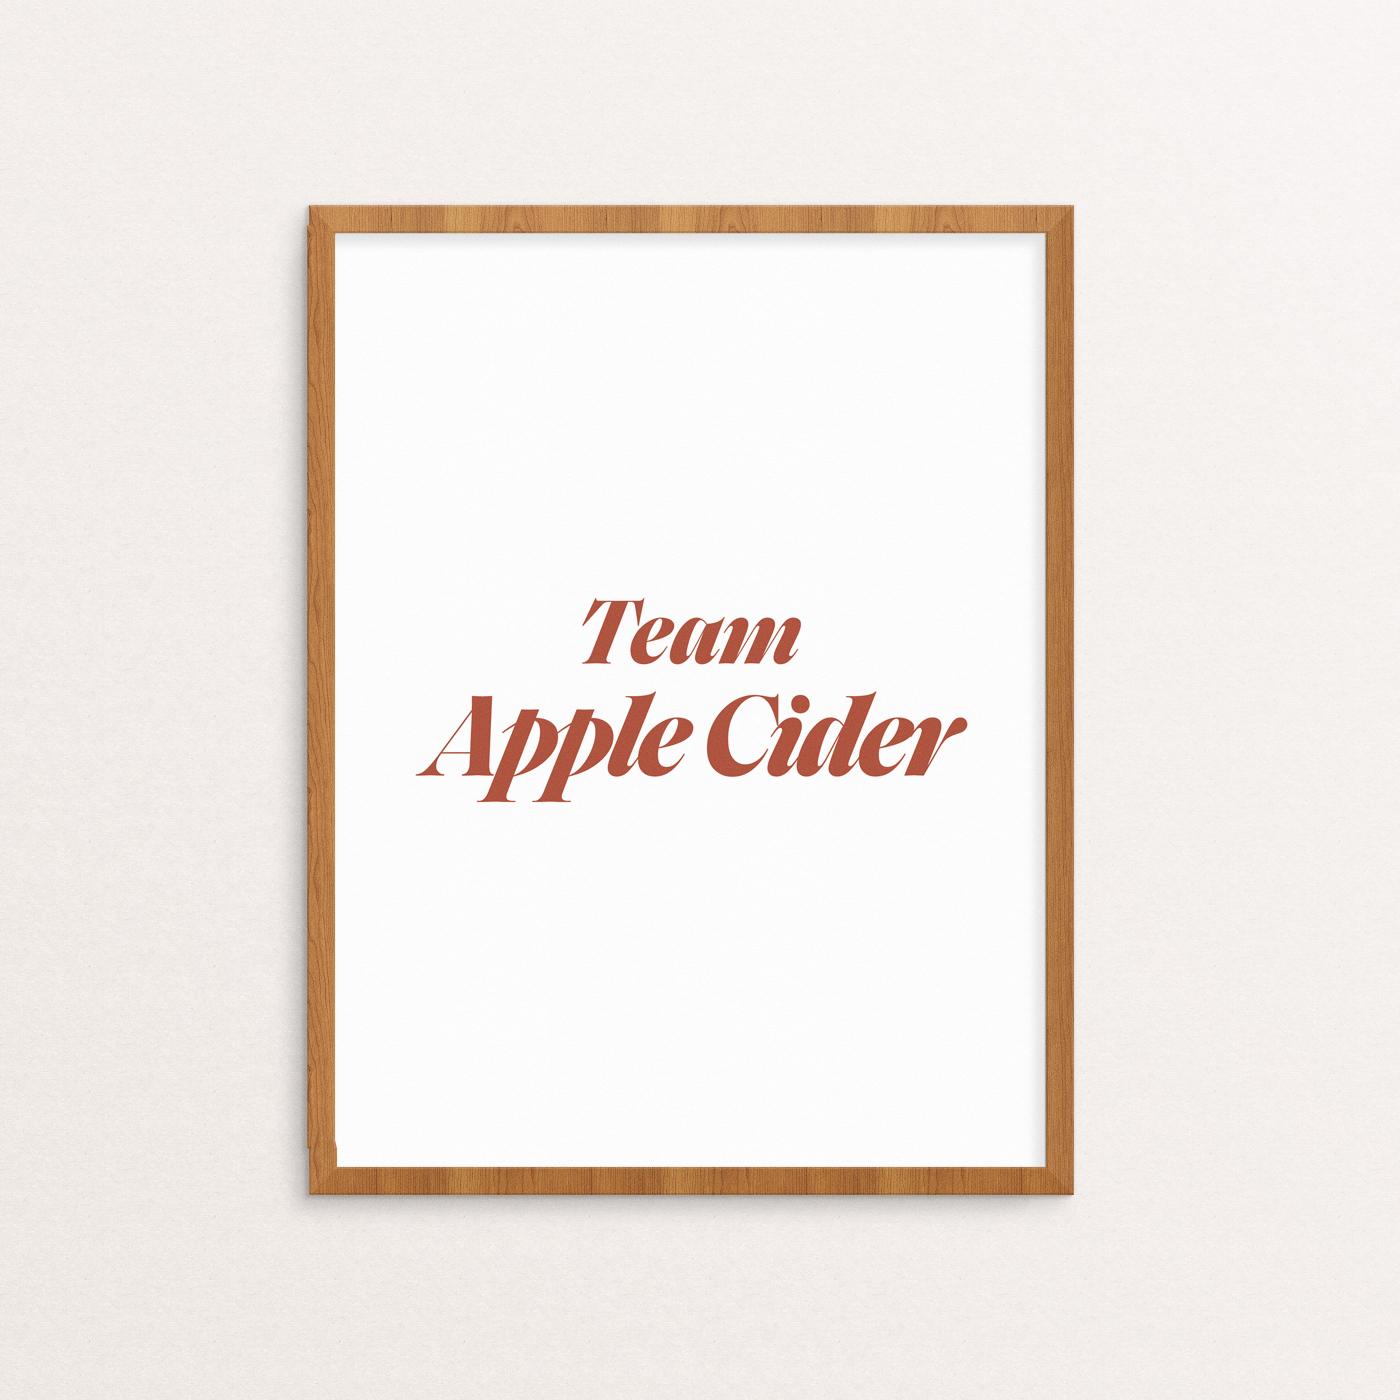 Team Apple Cider Print in Auburn Type on White Background